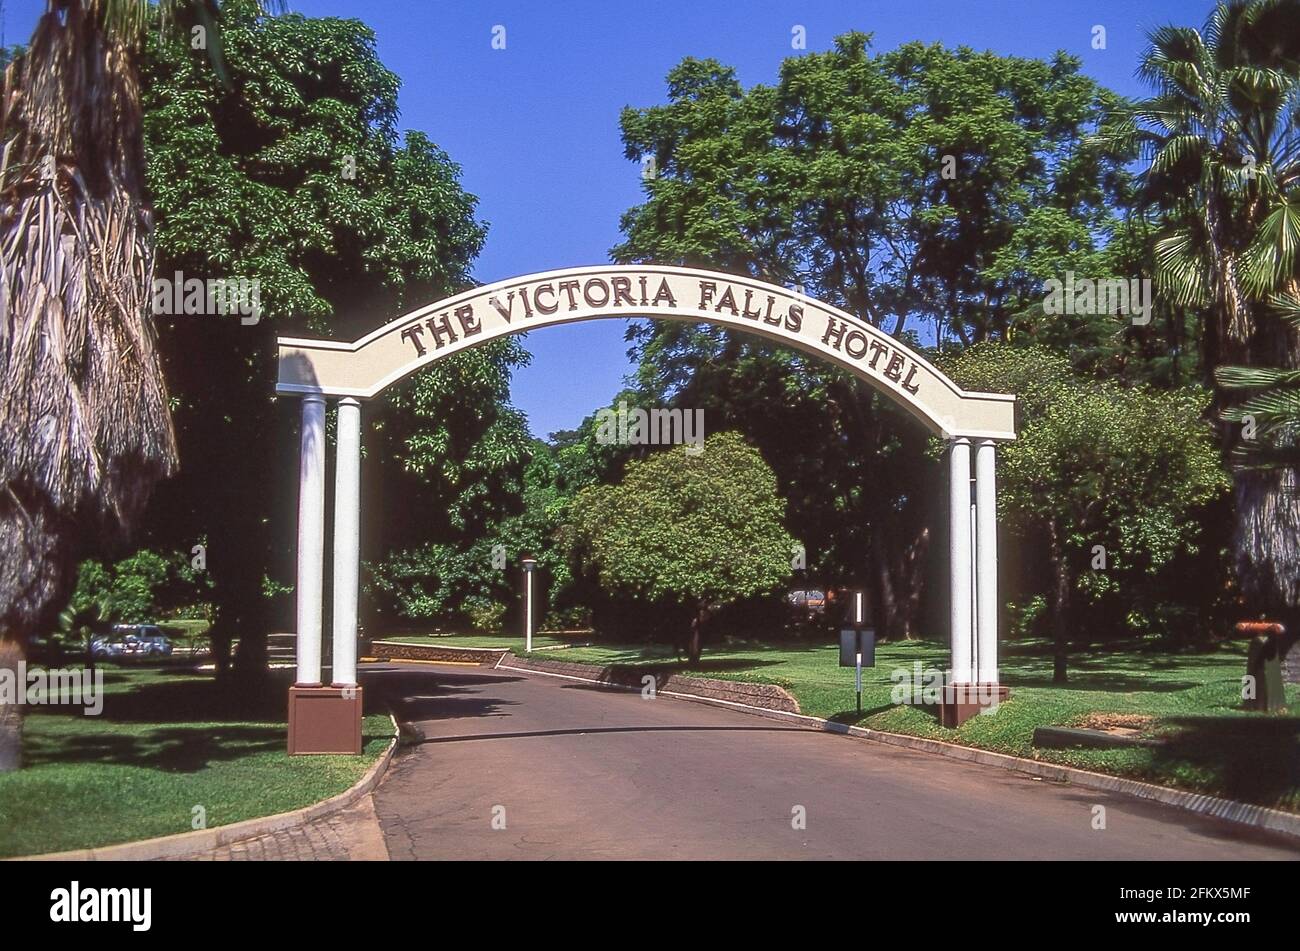 Entrance arch to Victoria Falls Hotel and gardens, Victoria Falls, Matabeleland, Zimbabwe Stock Photo